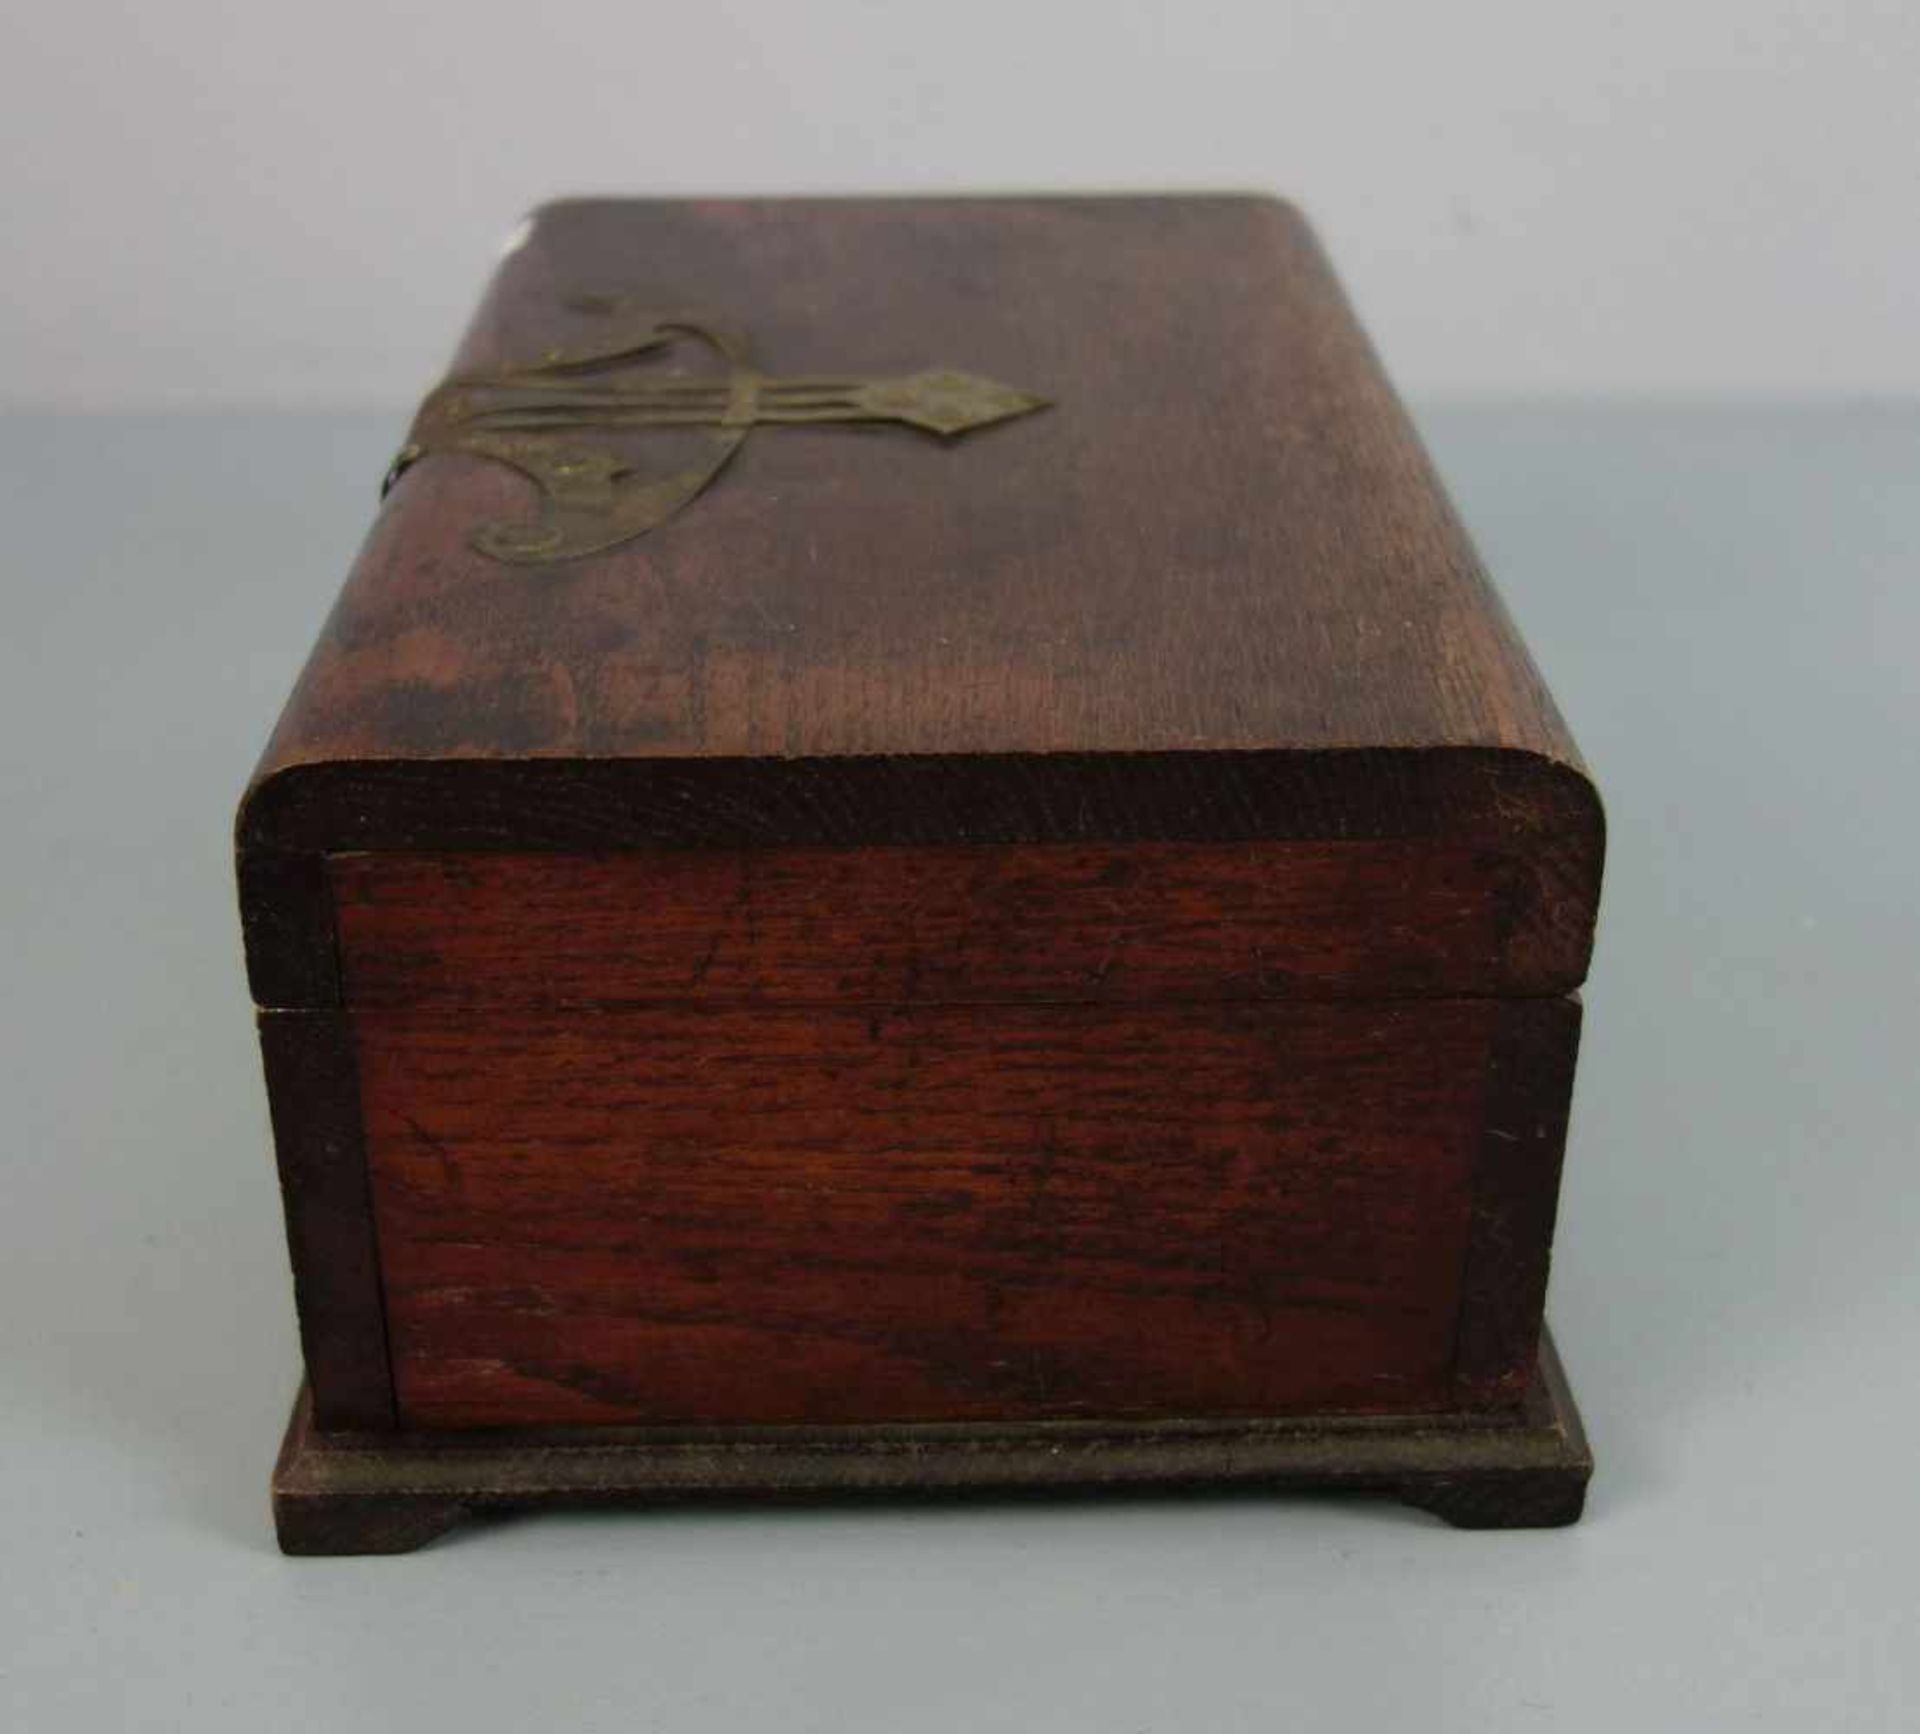 JUGENDSTIL SCHATULLE / art nouveau box, um 1900. Eiche, rotbraun lasiert. Rechteckige Schatulle - Bild 5 aus 5